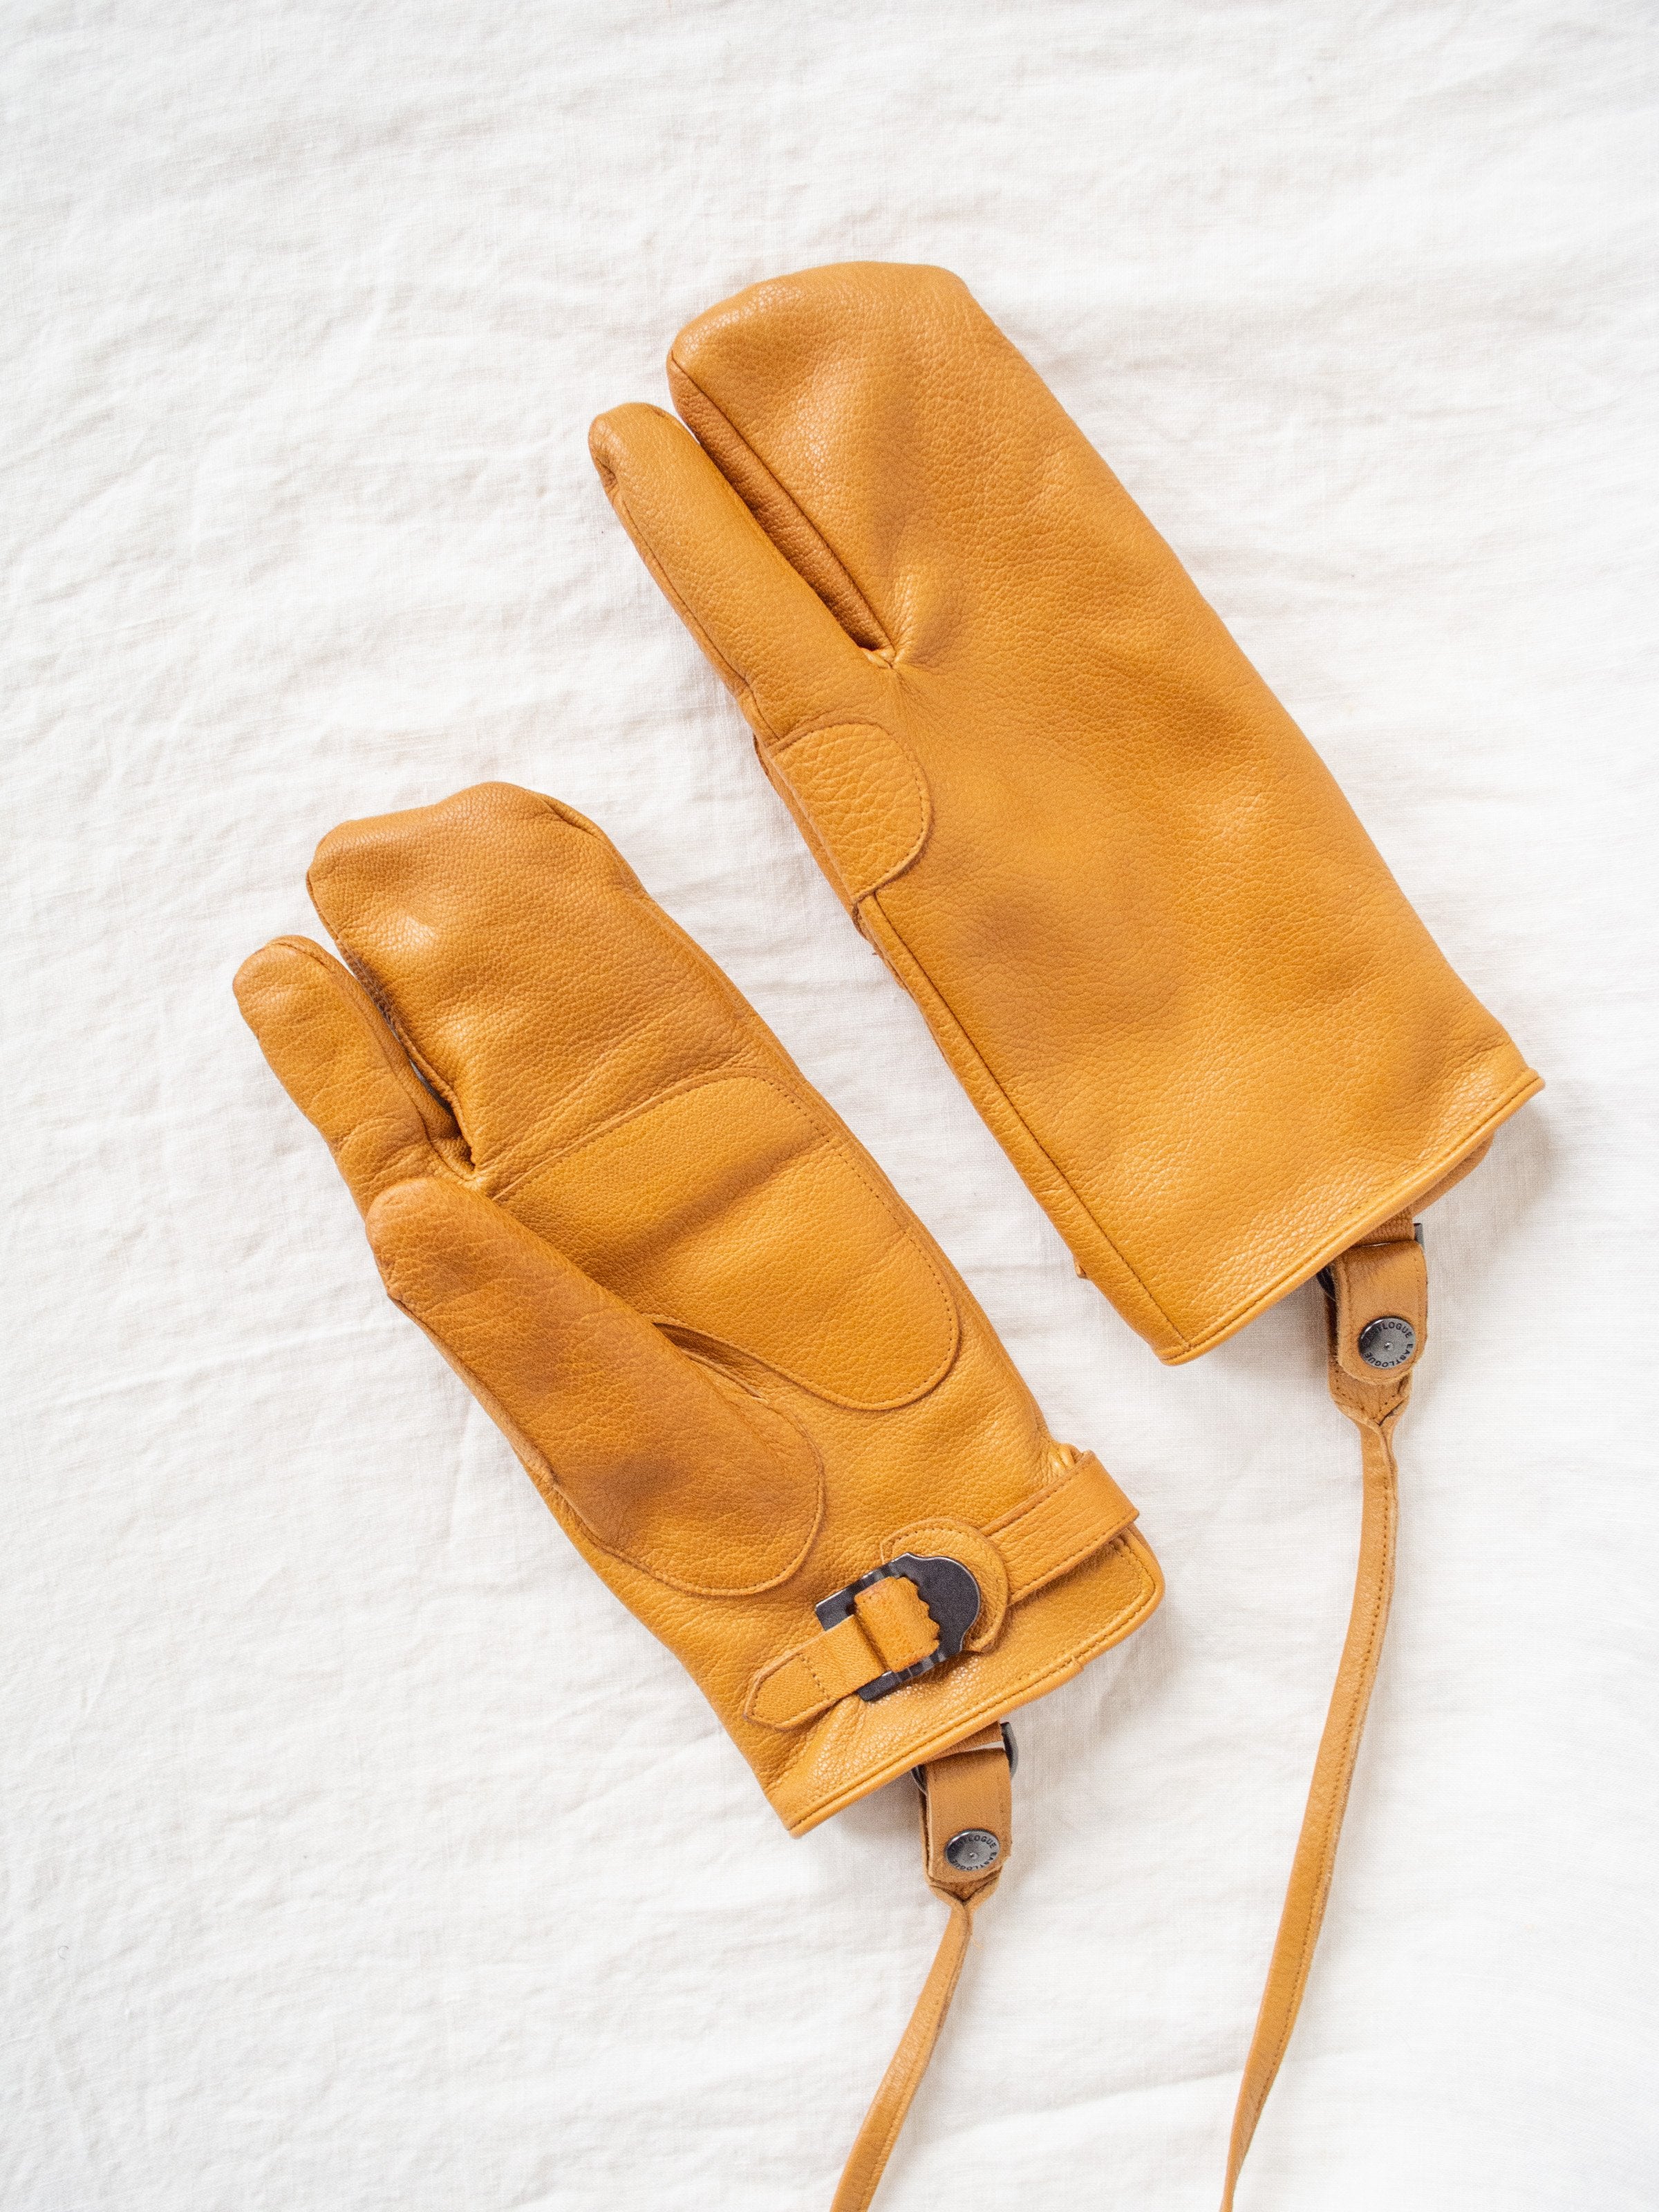 Namu Shop - Eastlogue Rifle Leather Gloves - Tan (restocked)